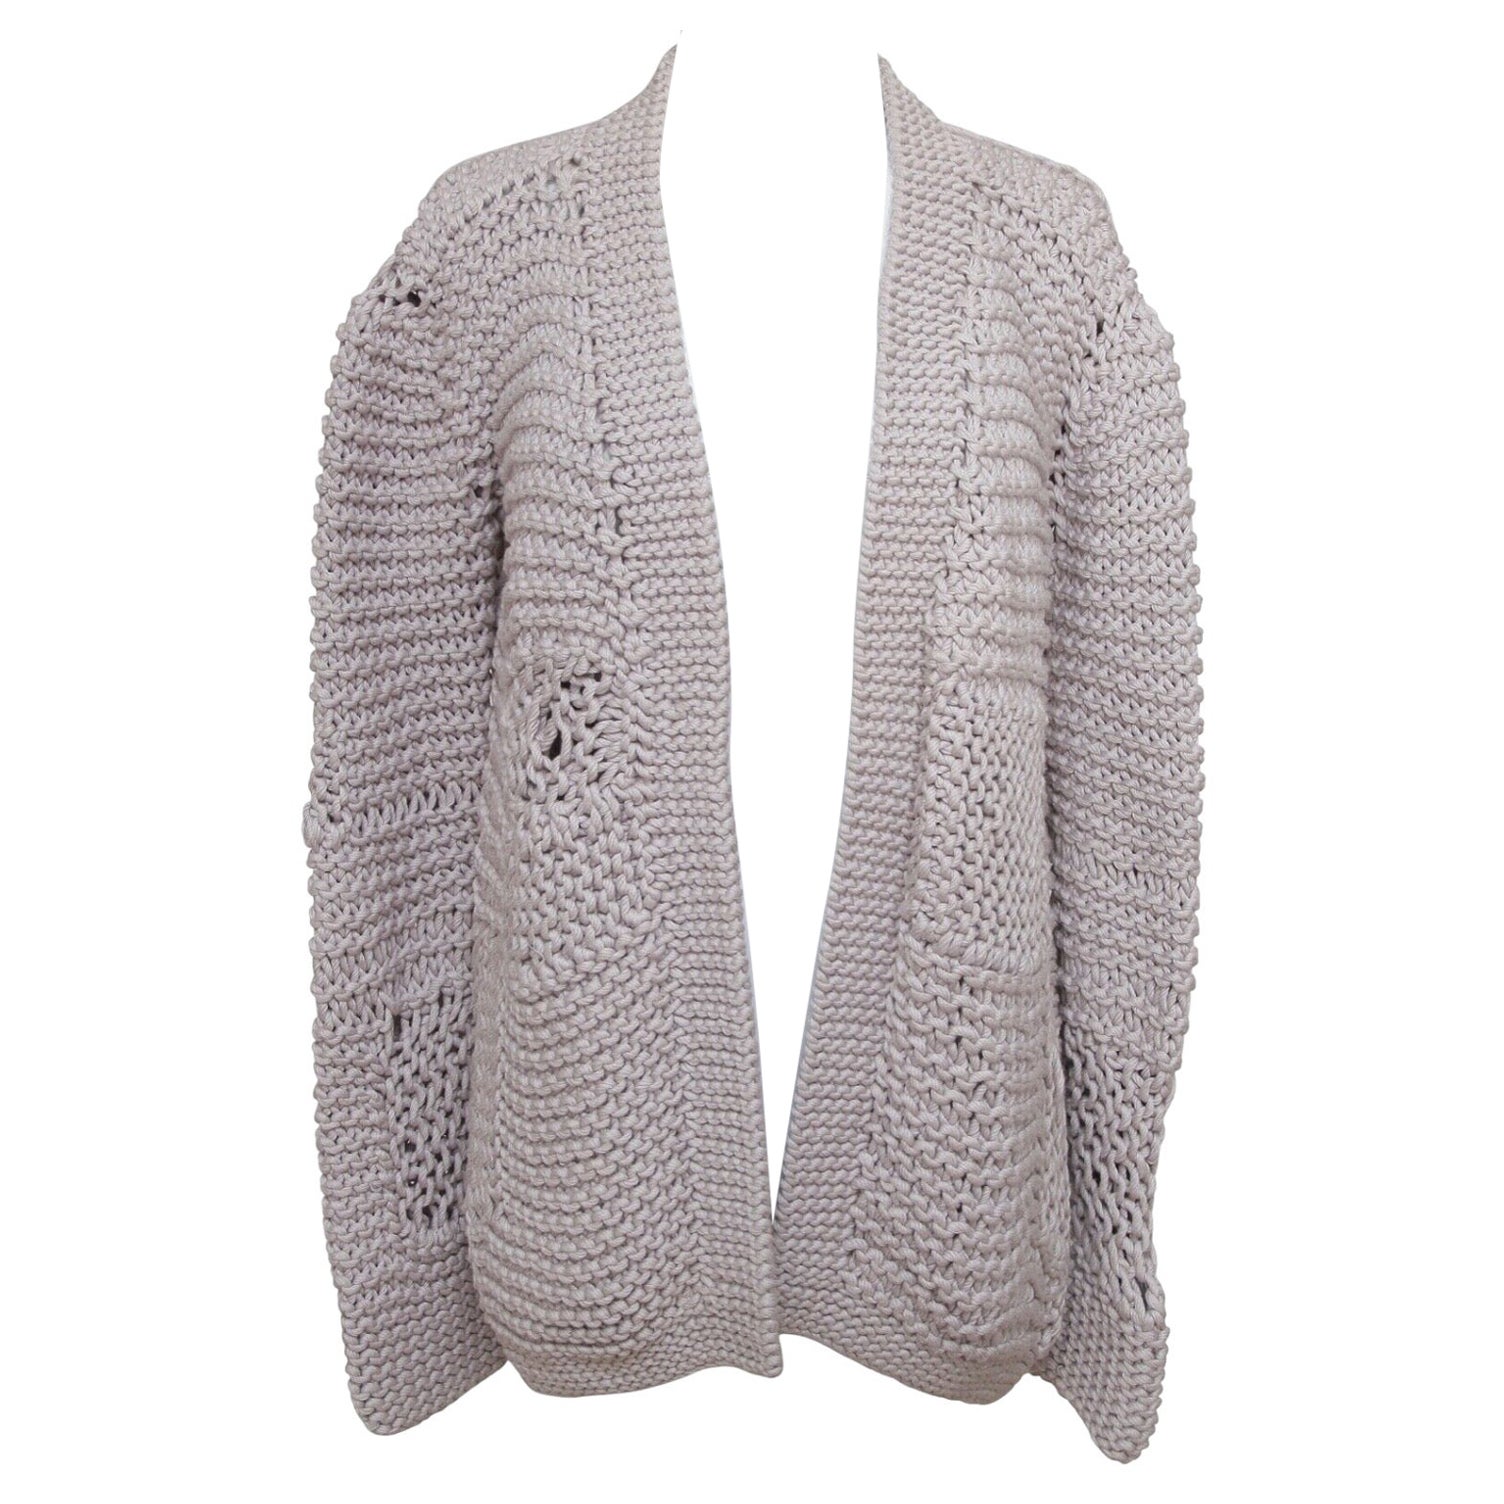 CHLOE Cardigan Sweater Knit Grey Lavender Open Front Long Sleeve Sz S 2008